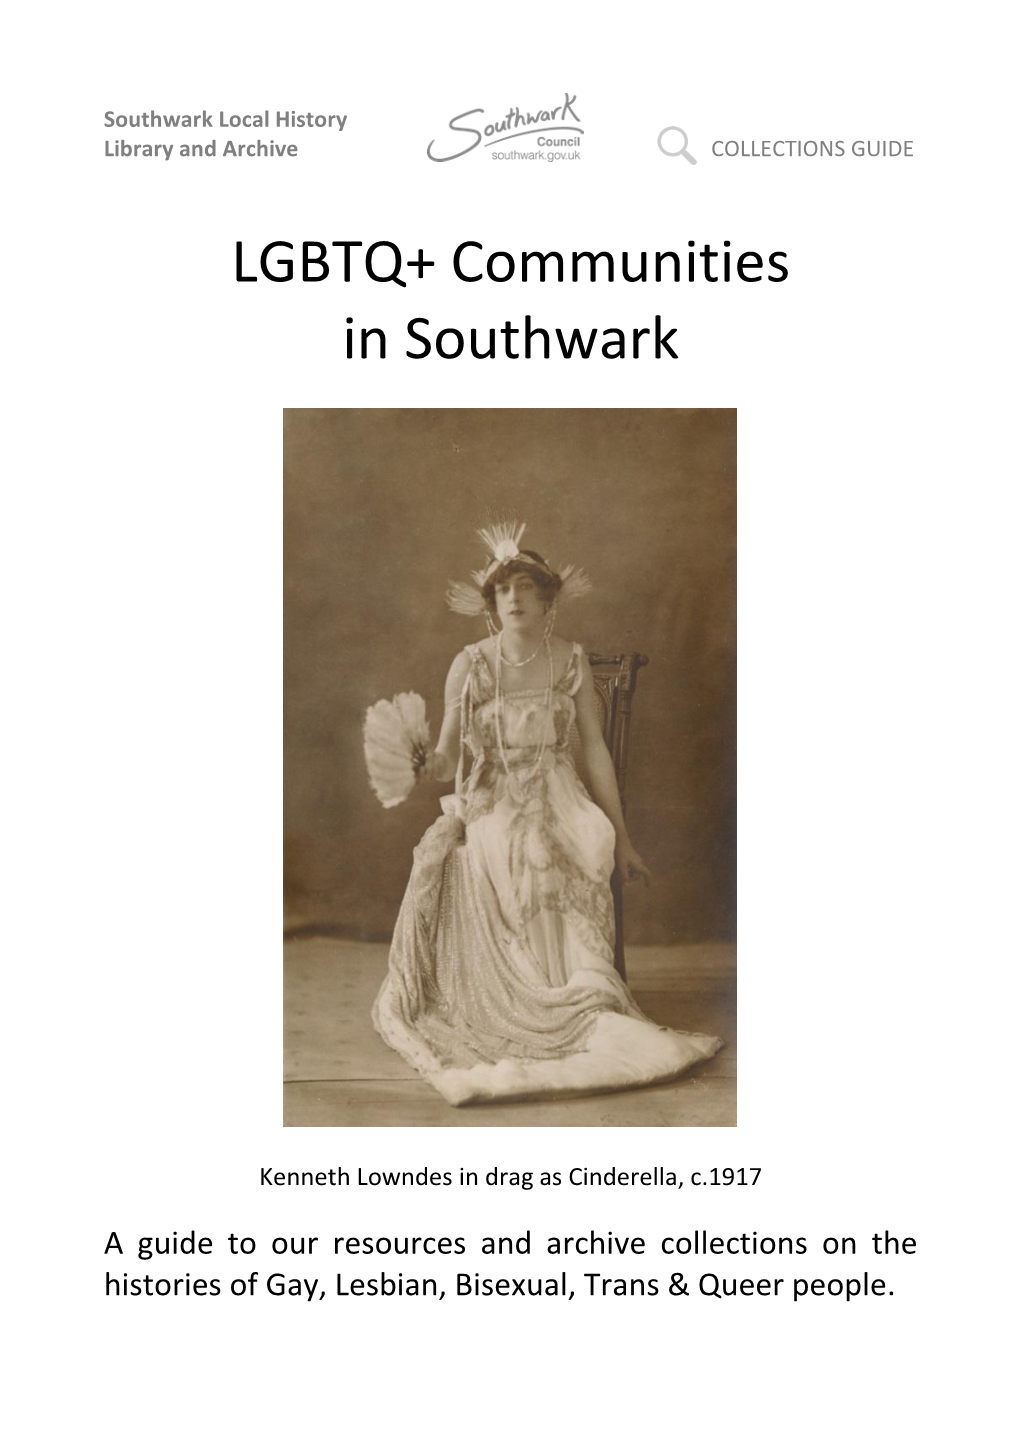 LGBTQ+ Communities in Southwark